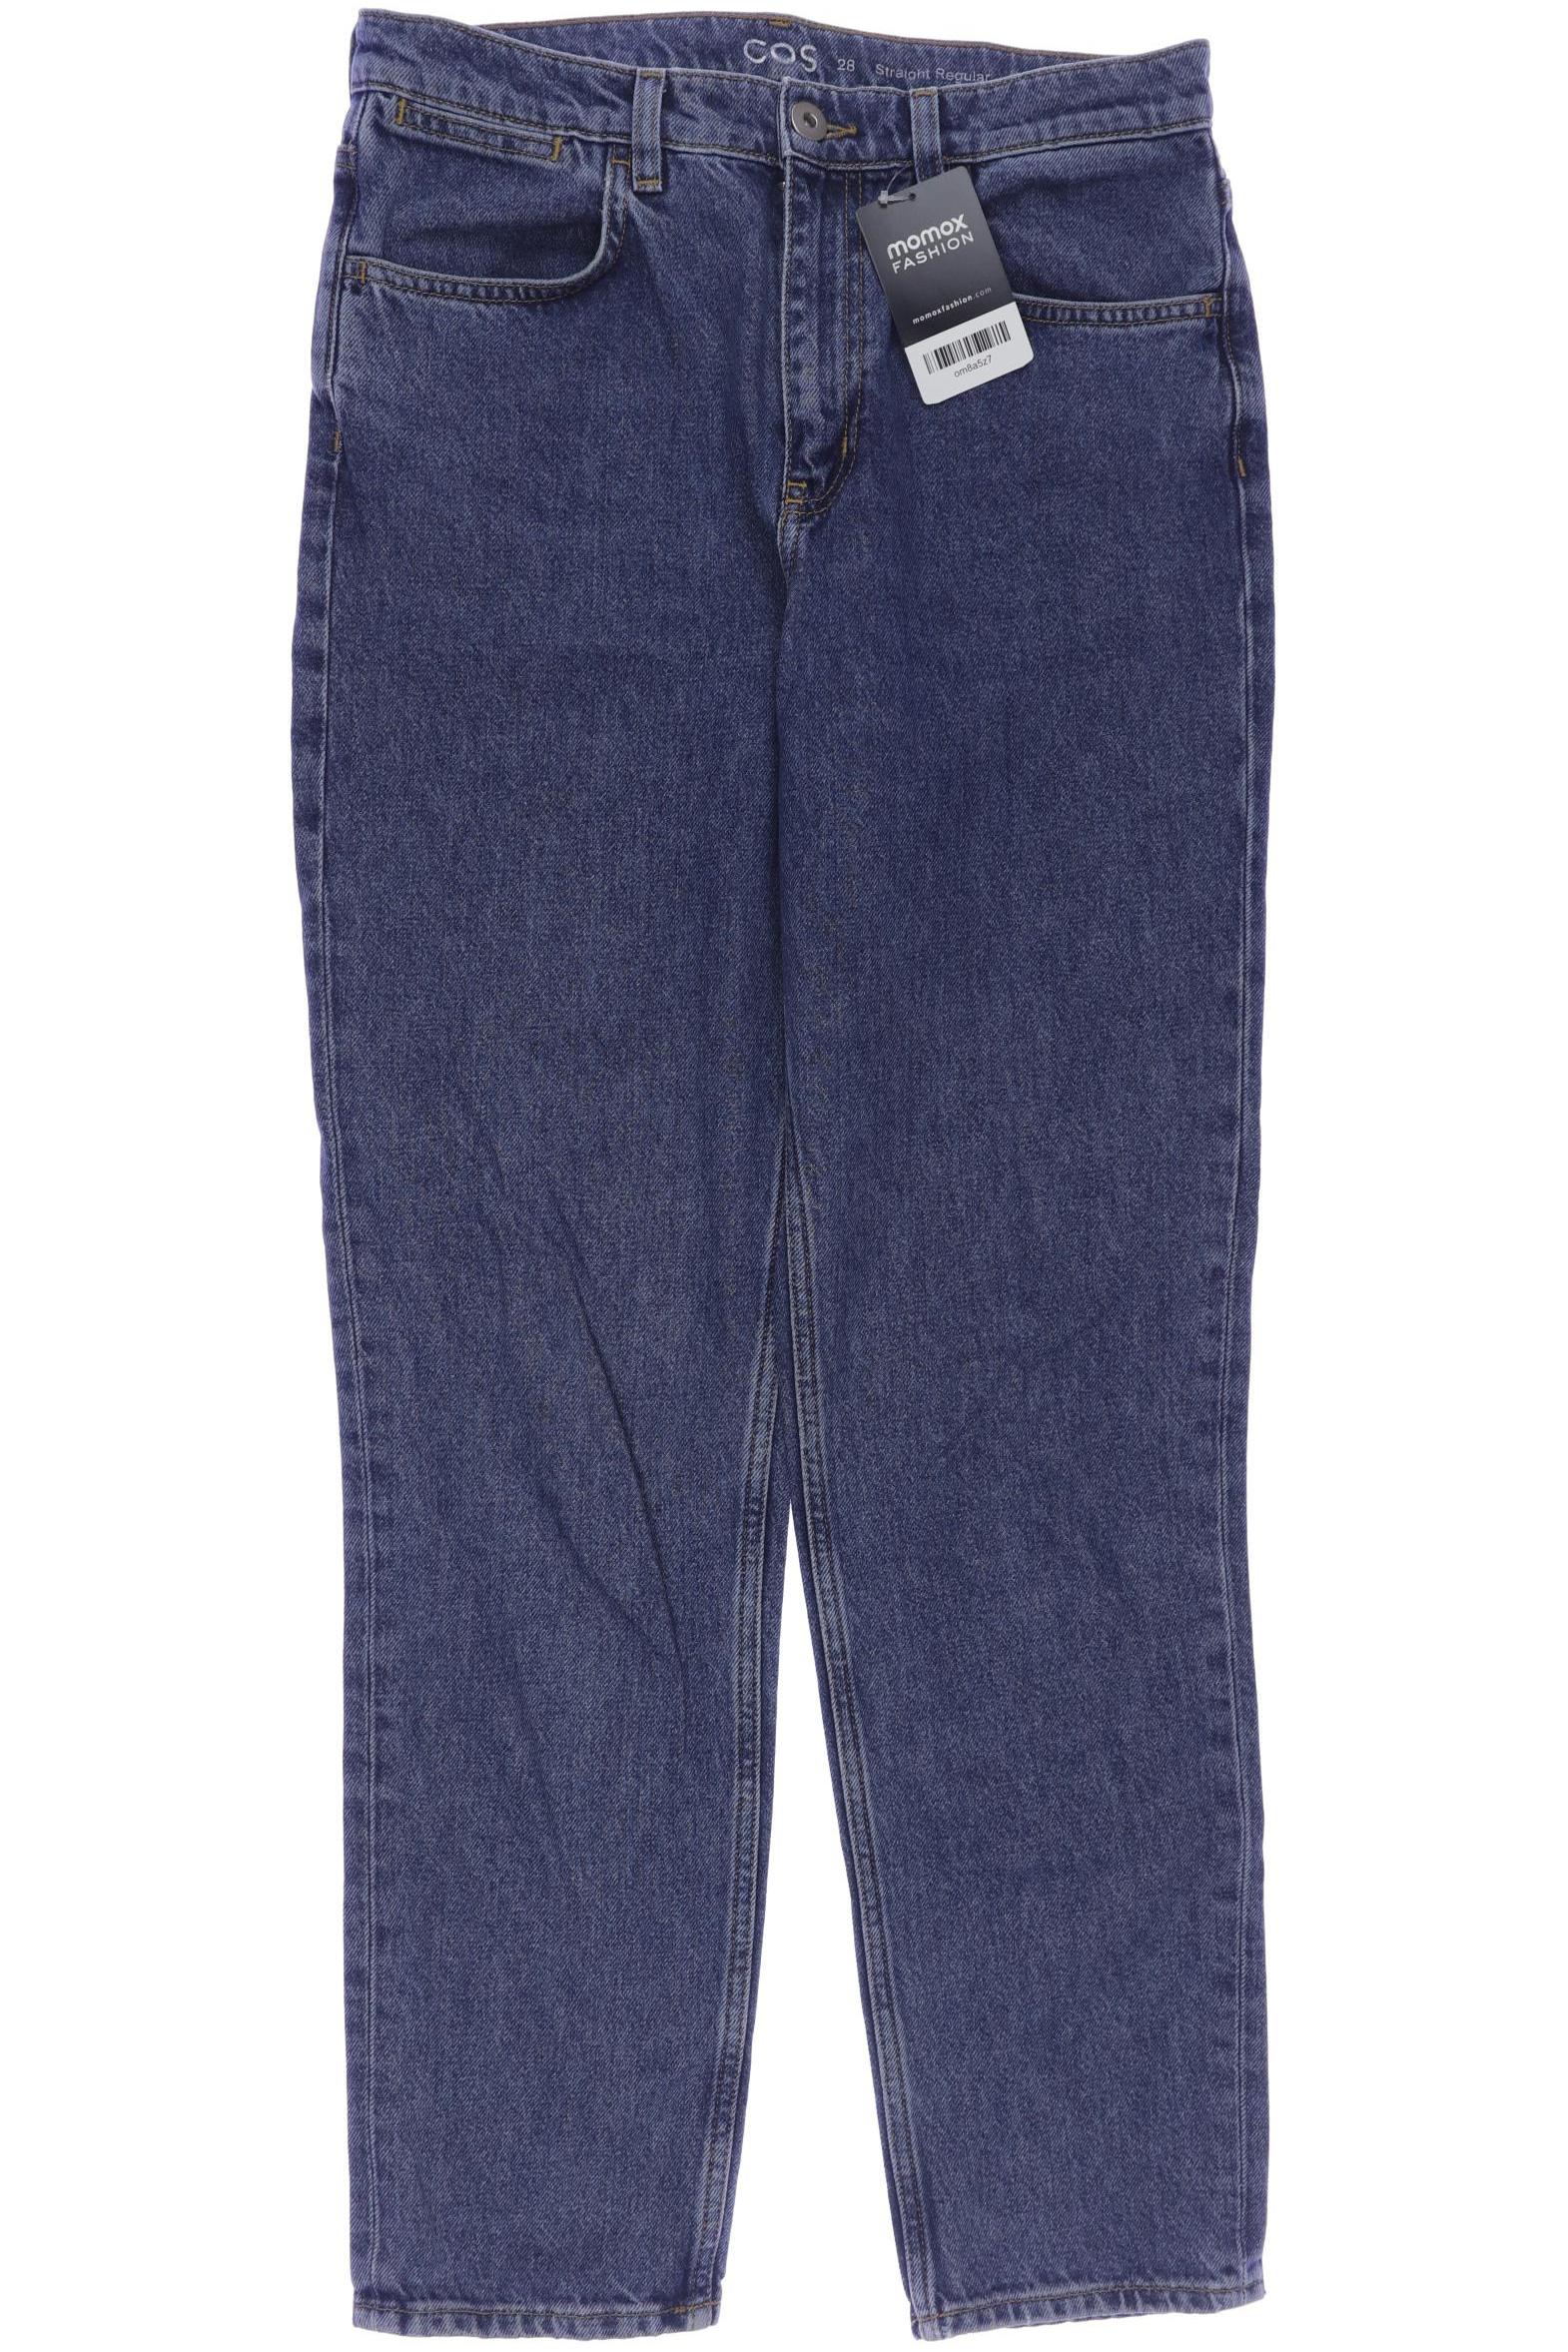 COS Damen Jeans, marineblau, Gr. 38 von COS